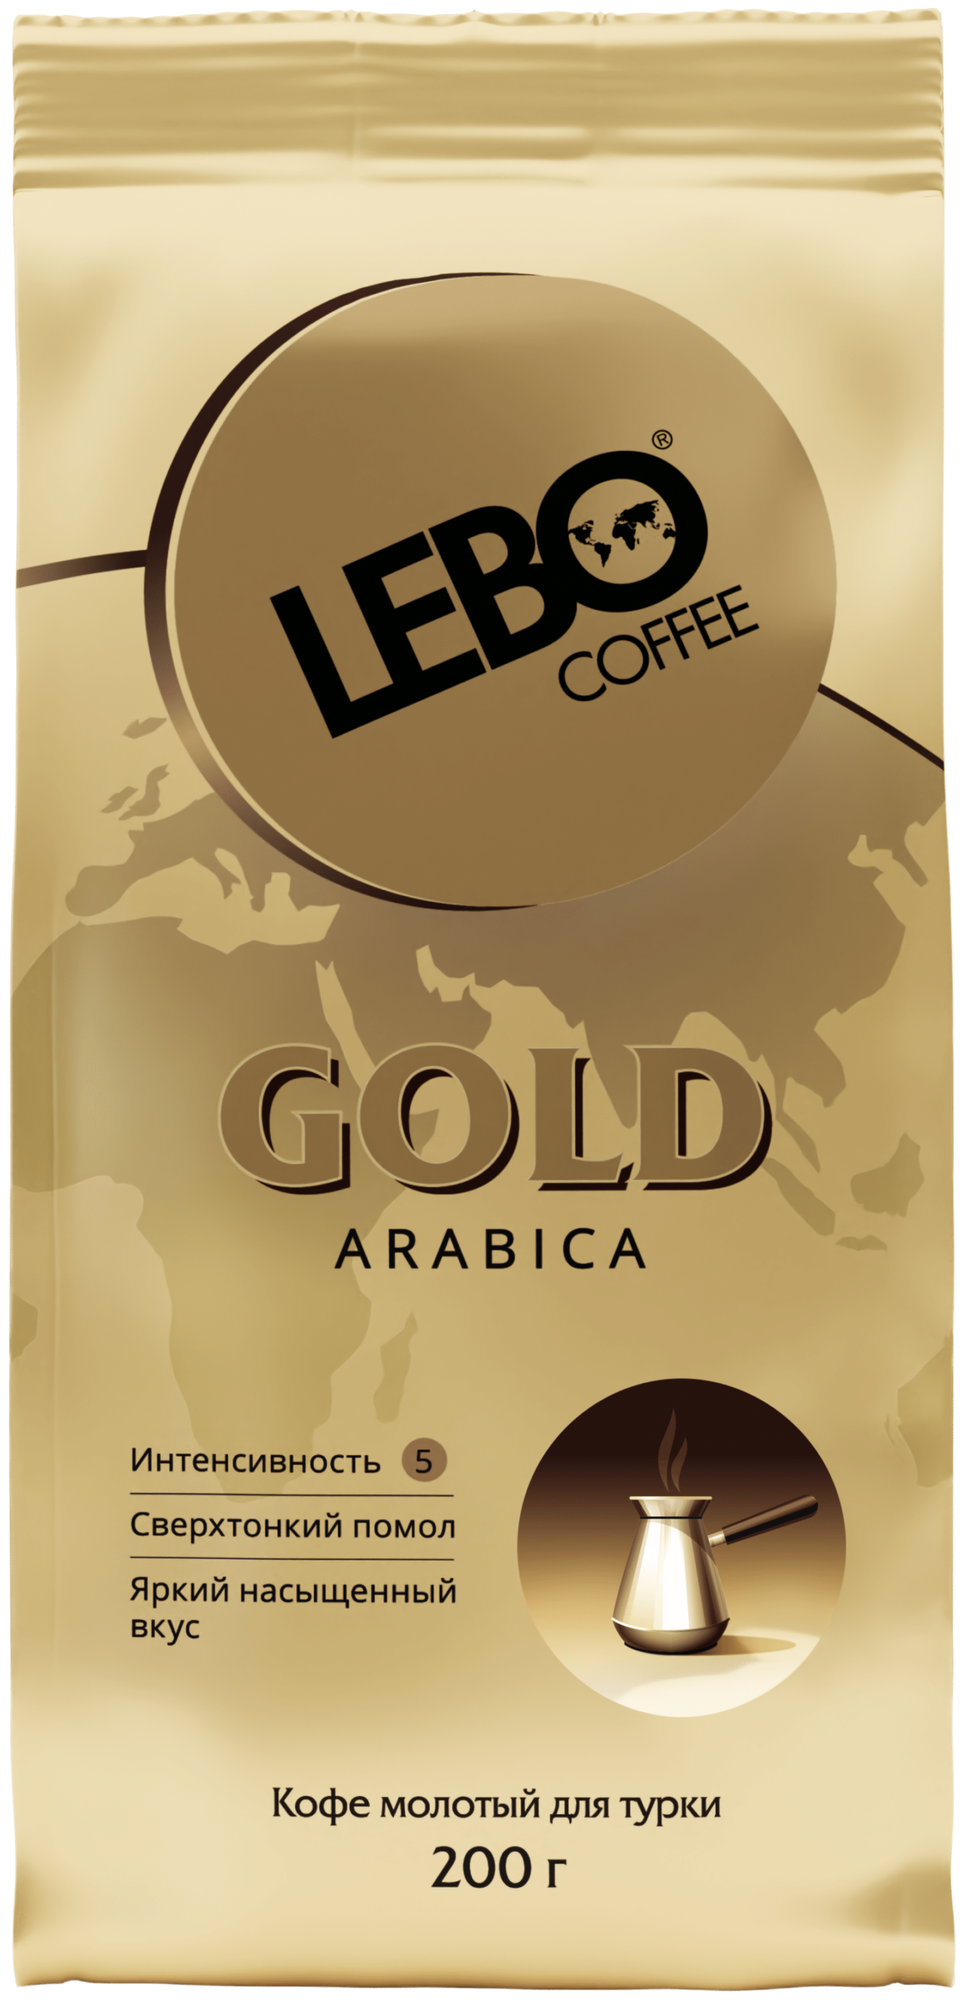 Кофе молотый Lebo Gold Arabica для турки 200 г - фотография № 7